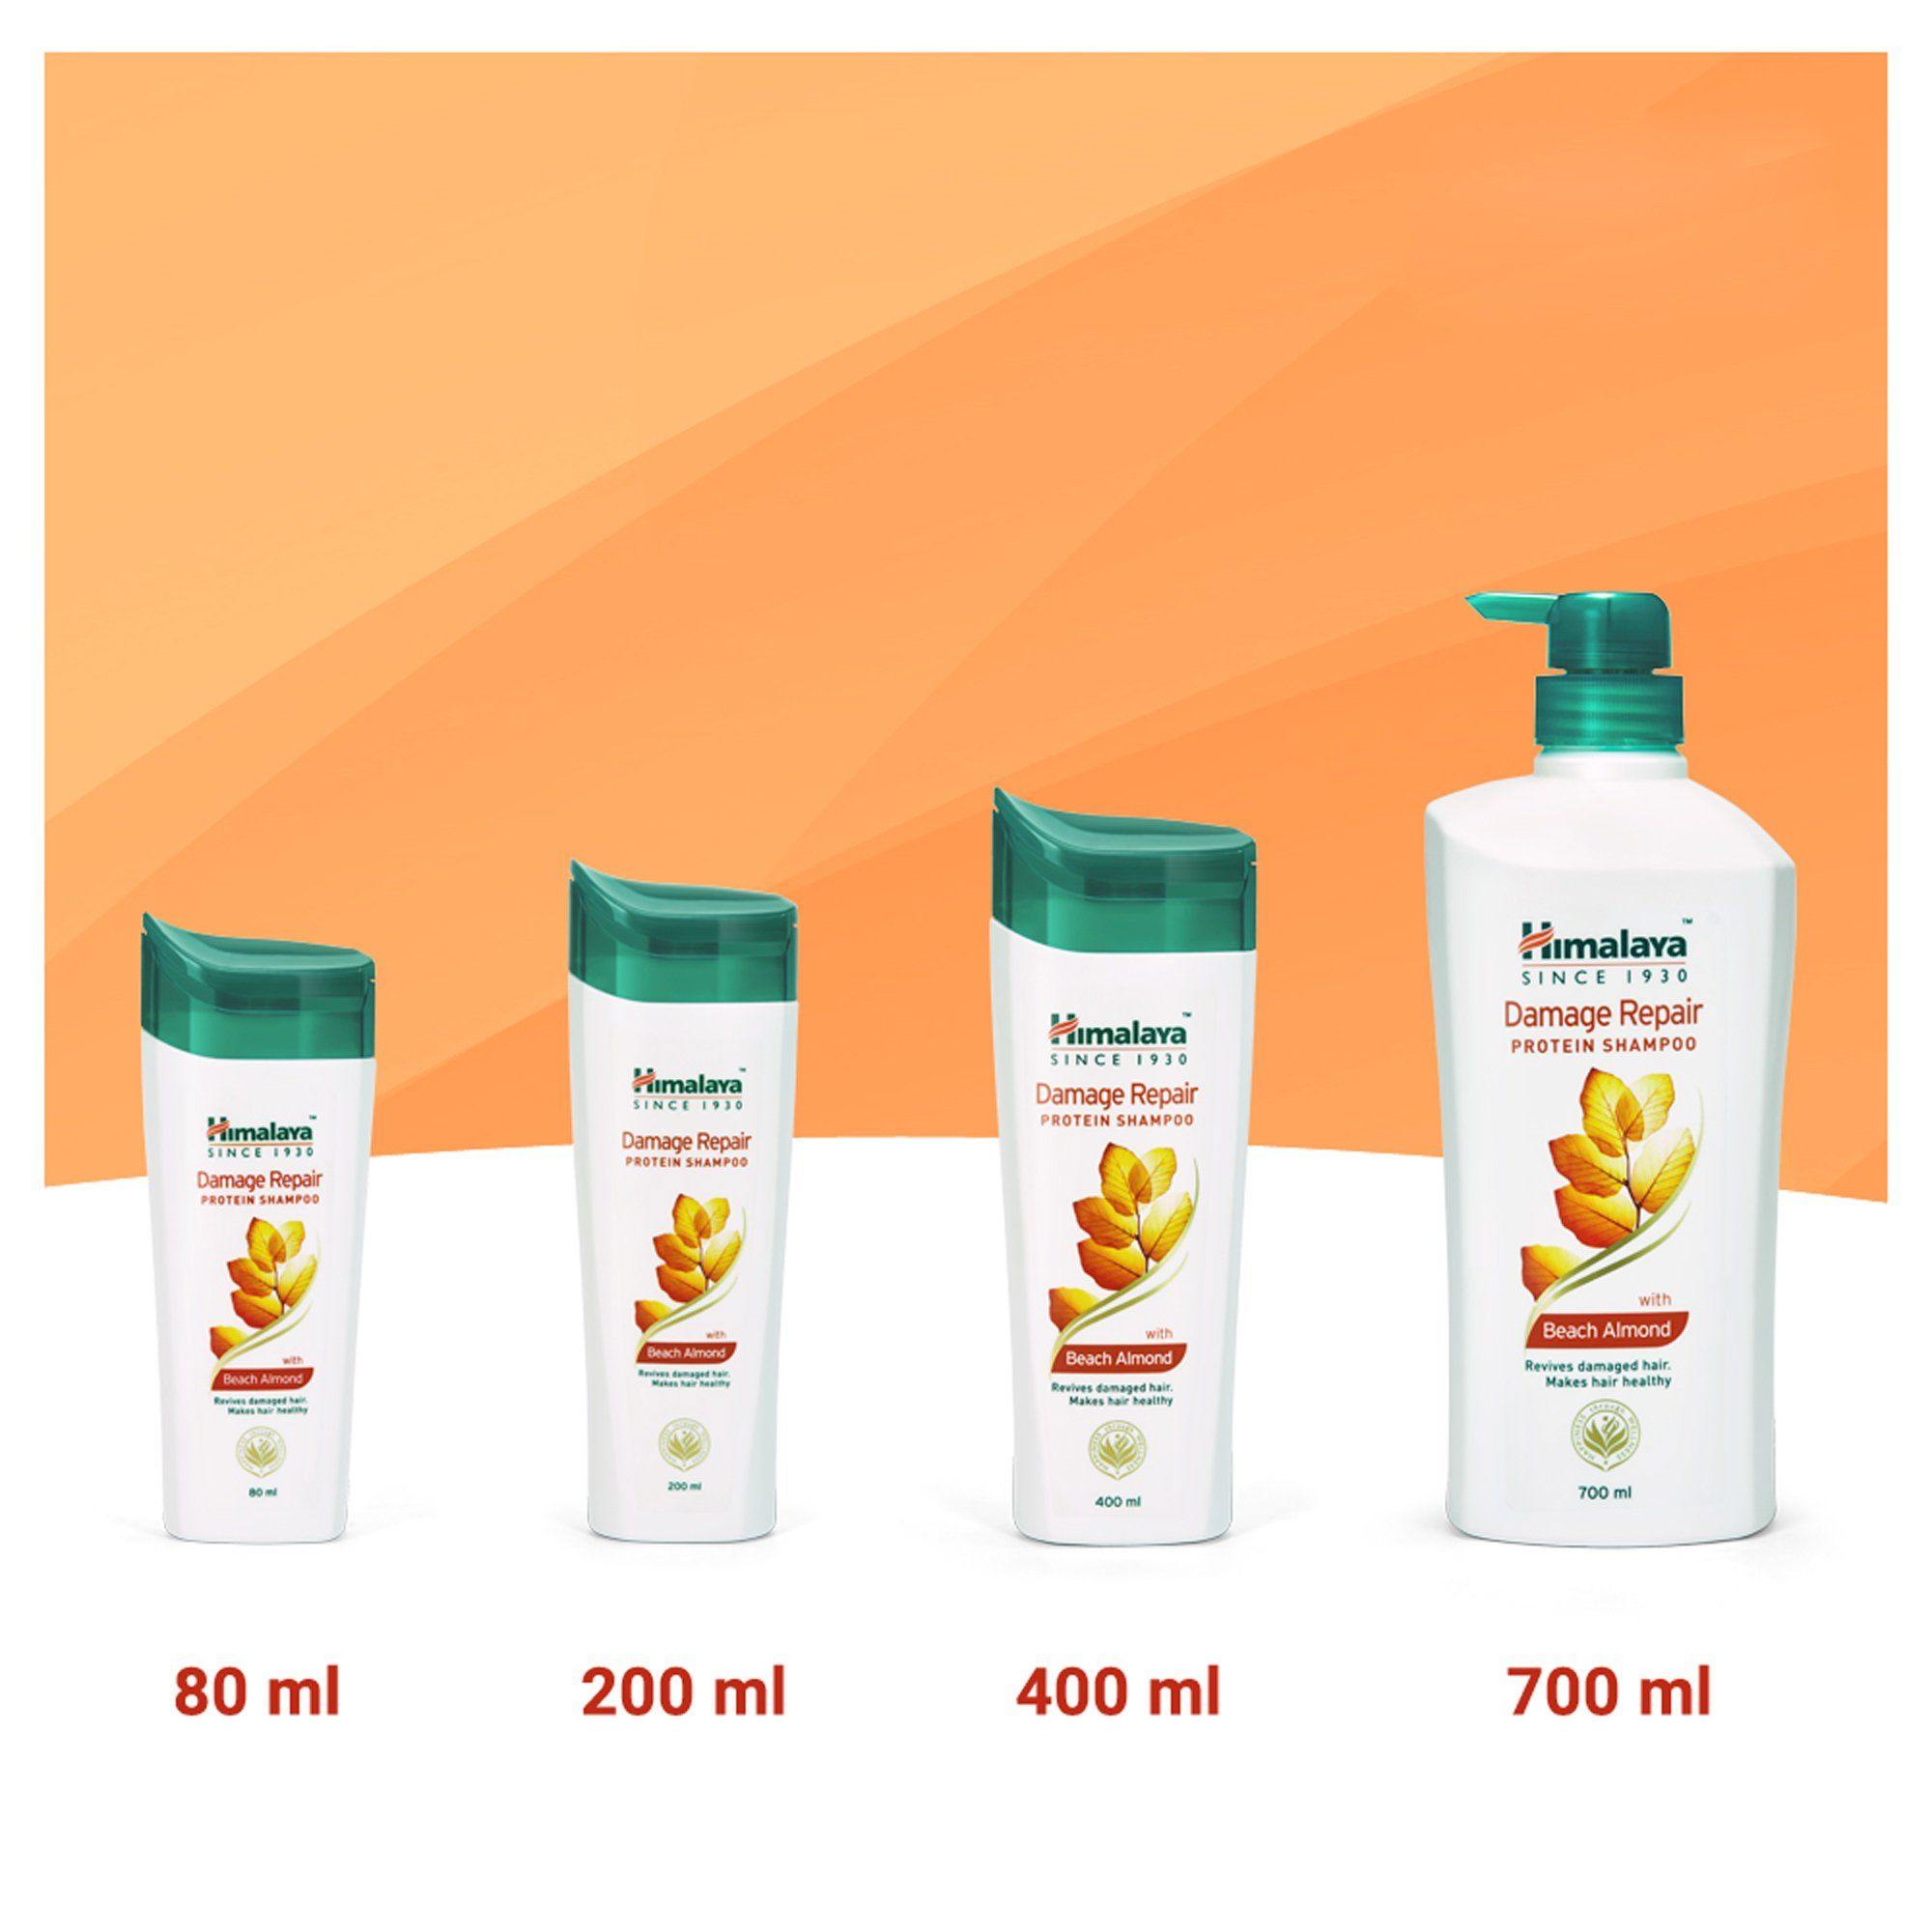 Himalaya Damage Repair Protein Shampoo - 80ml, 200ml, 400ml, and 700ml Variants